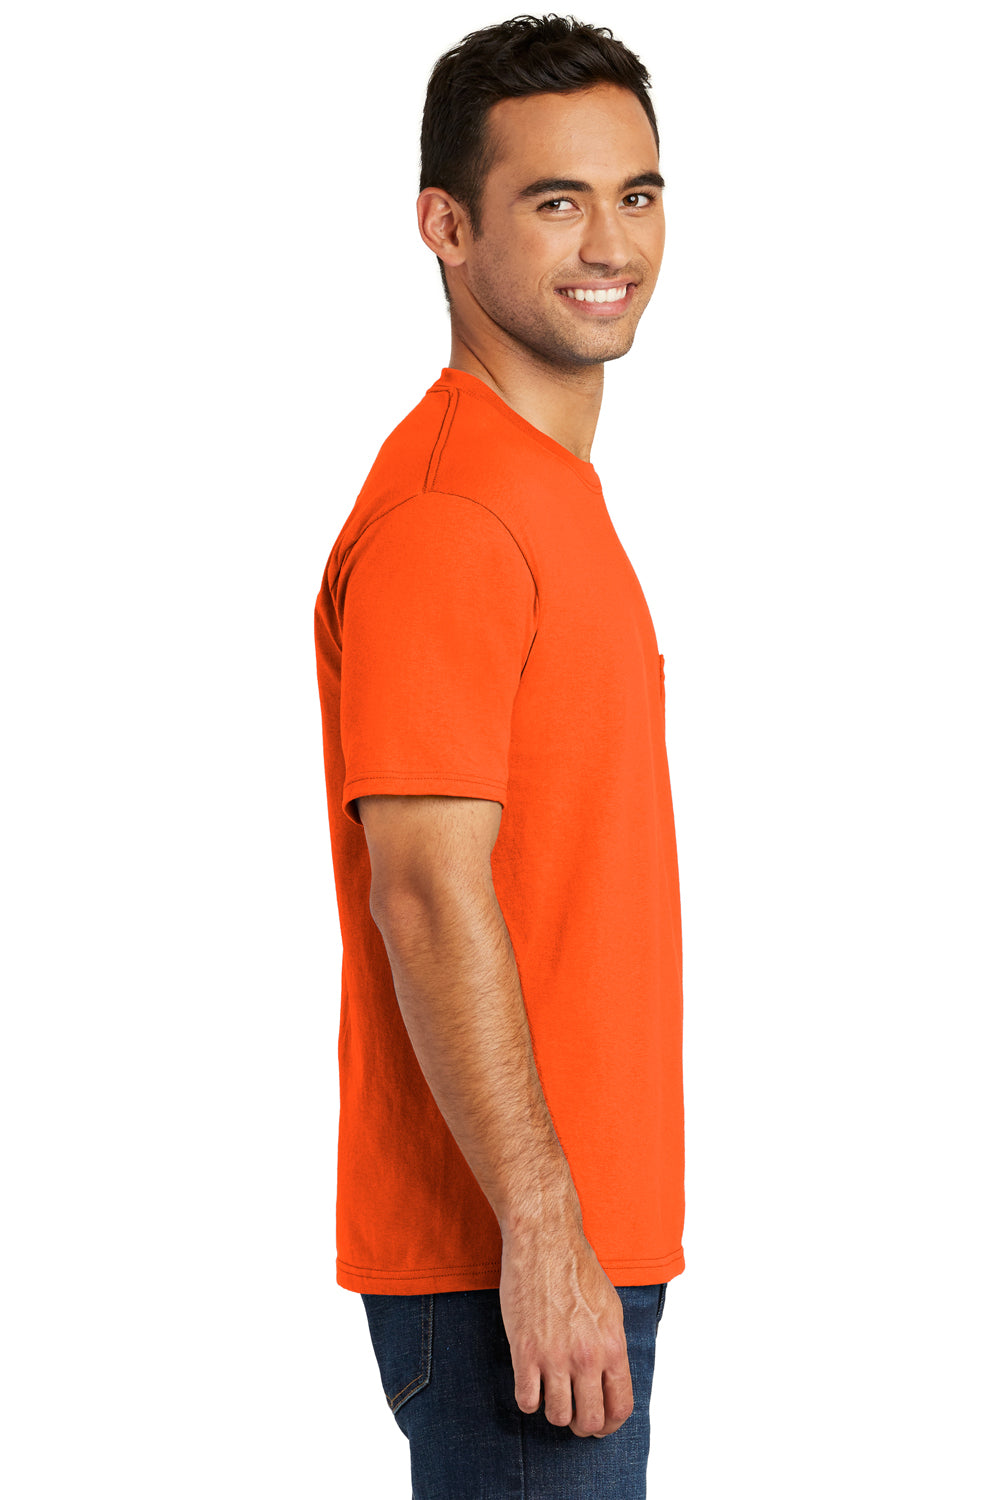 Port & Company USA100P Mens USA Made Short Sleeve Crewneck T-Shirt w/ Pocket Safety Orange Side